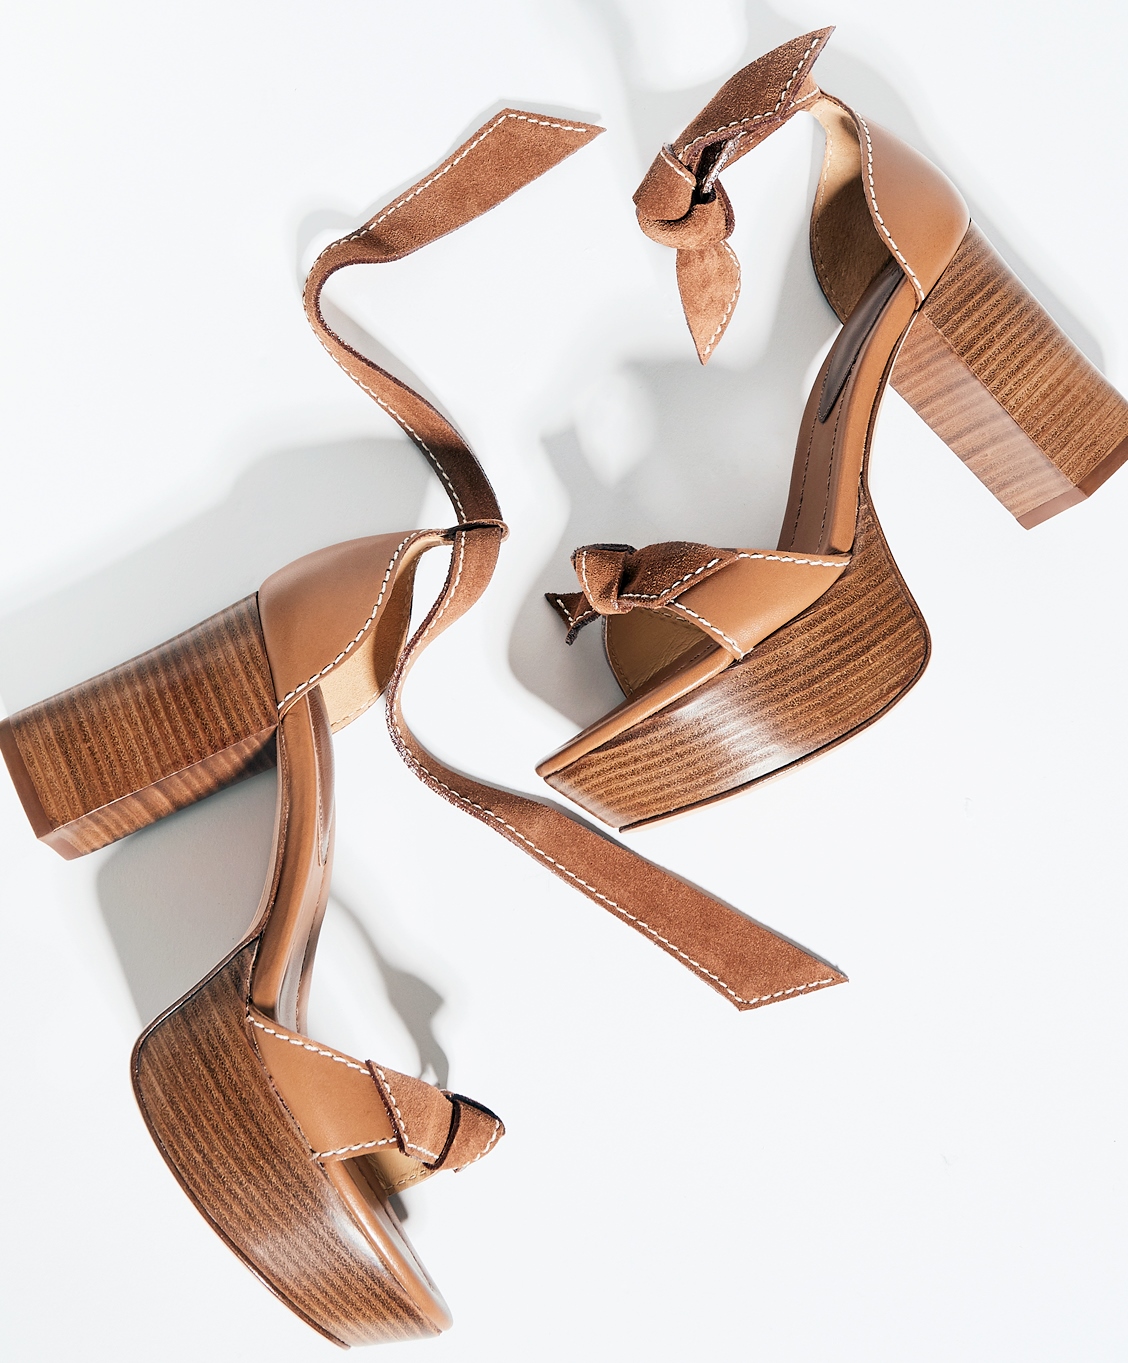 Shoe of the Day | Alexandre Birman Clarita Plateau Sandals | SHOEOGRAPHY